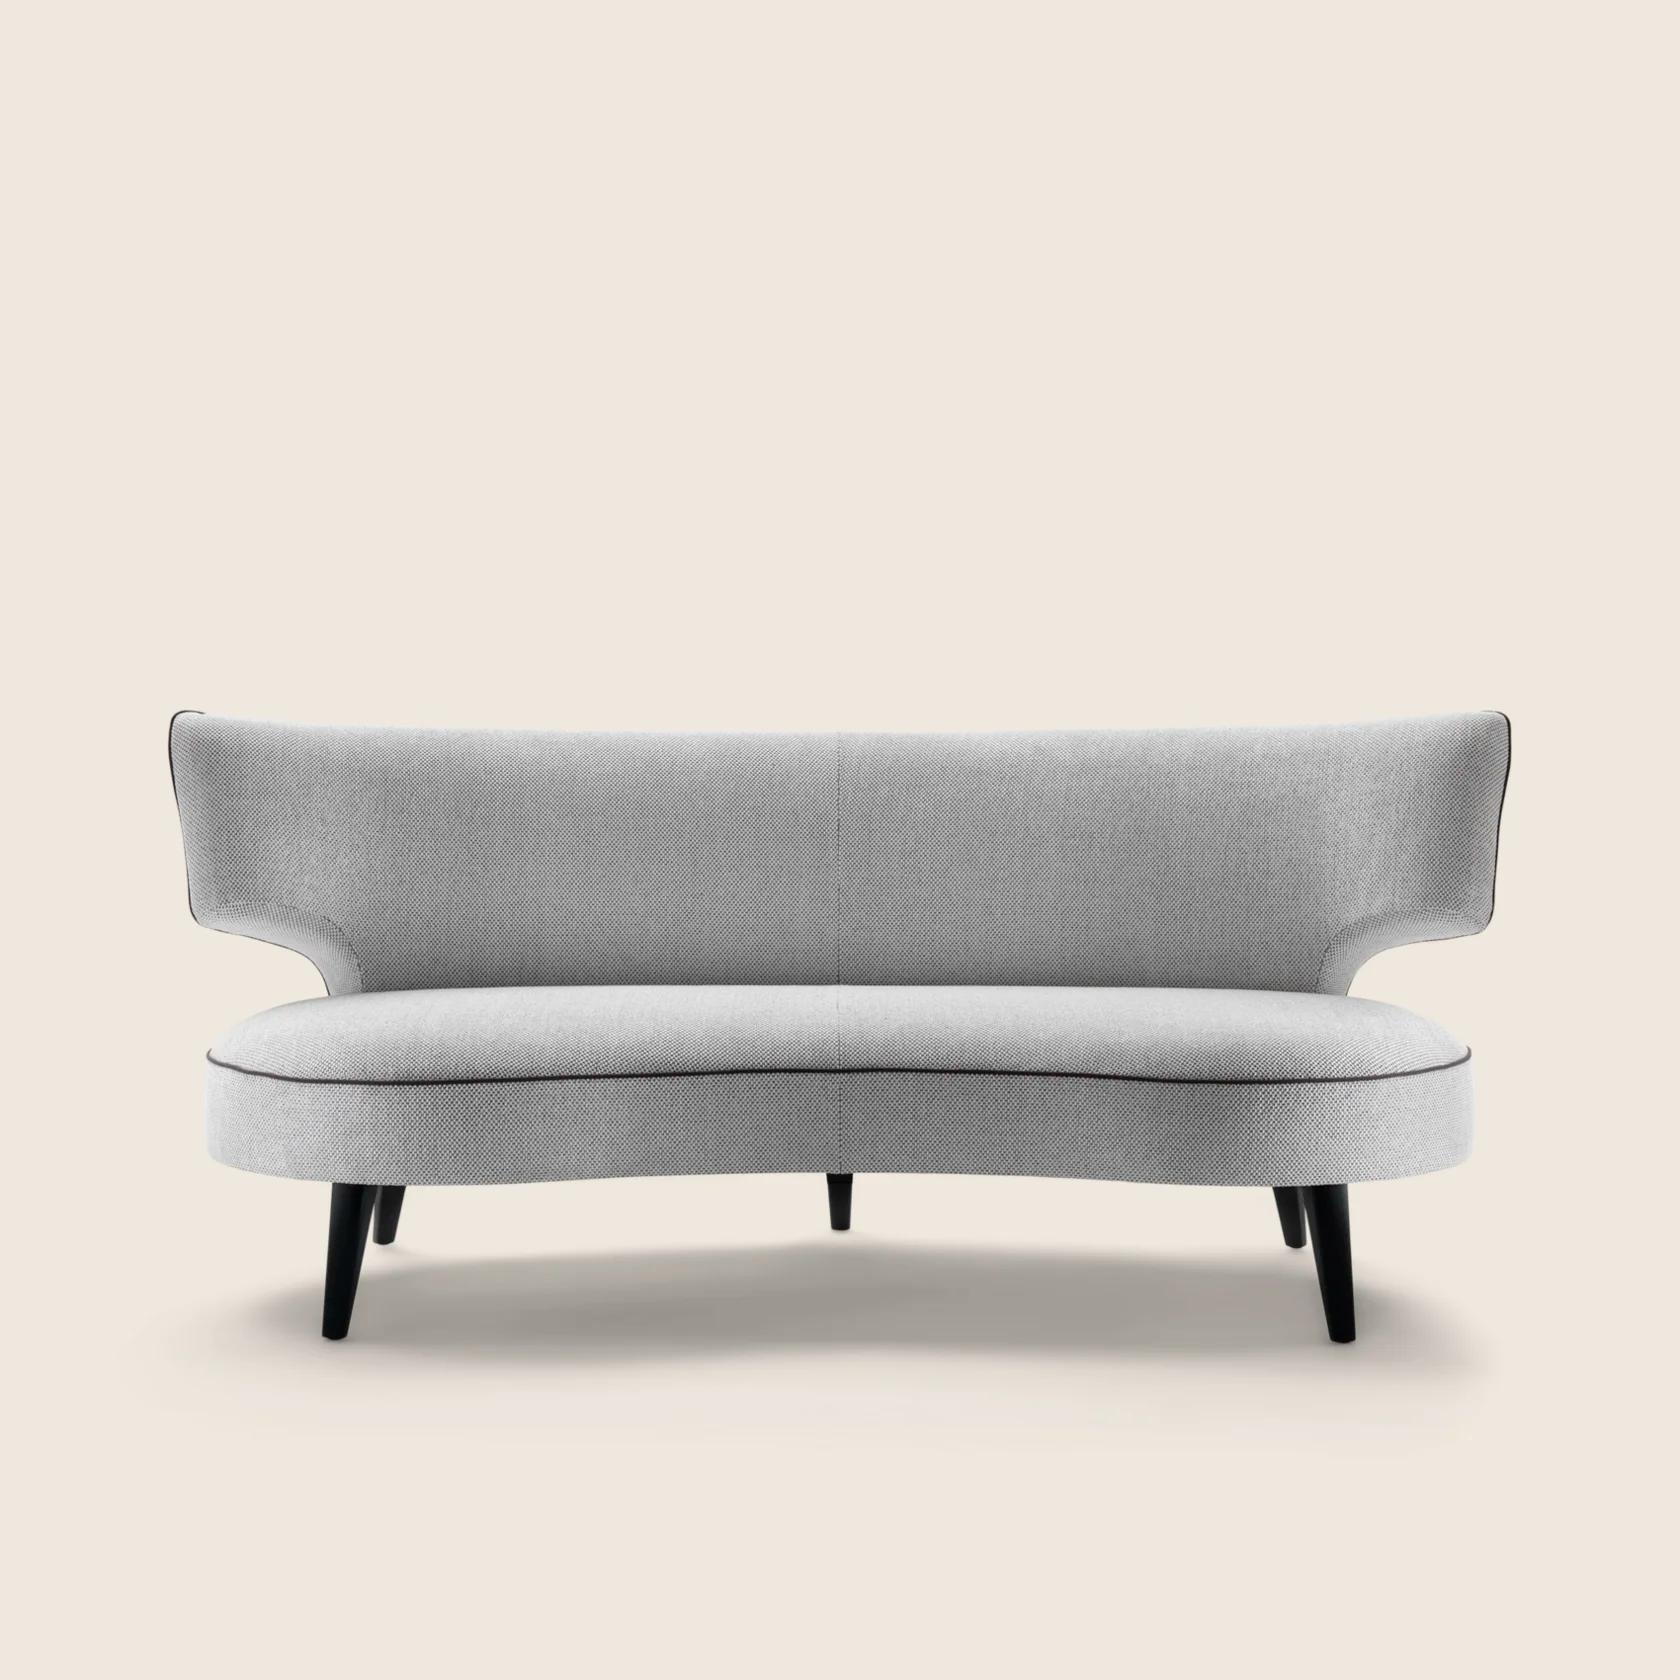 Italy Made Design Flexform | - in Sofas DROP